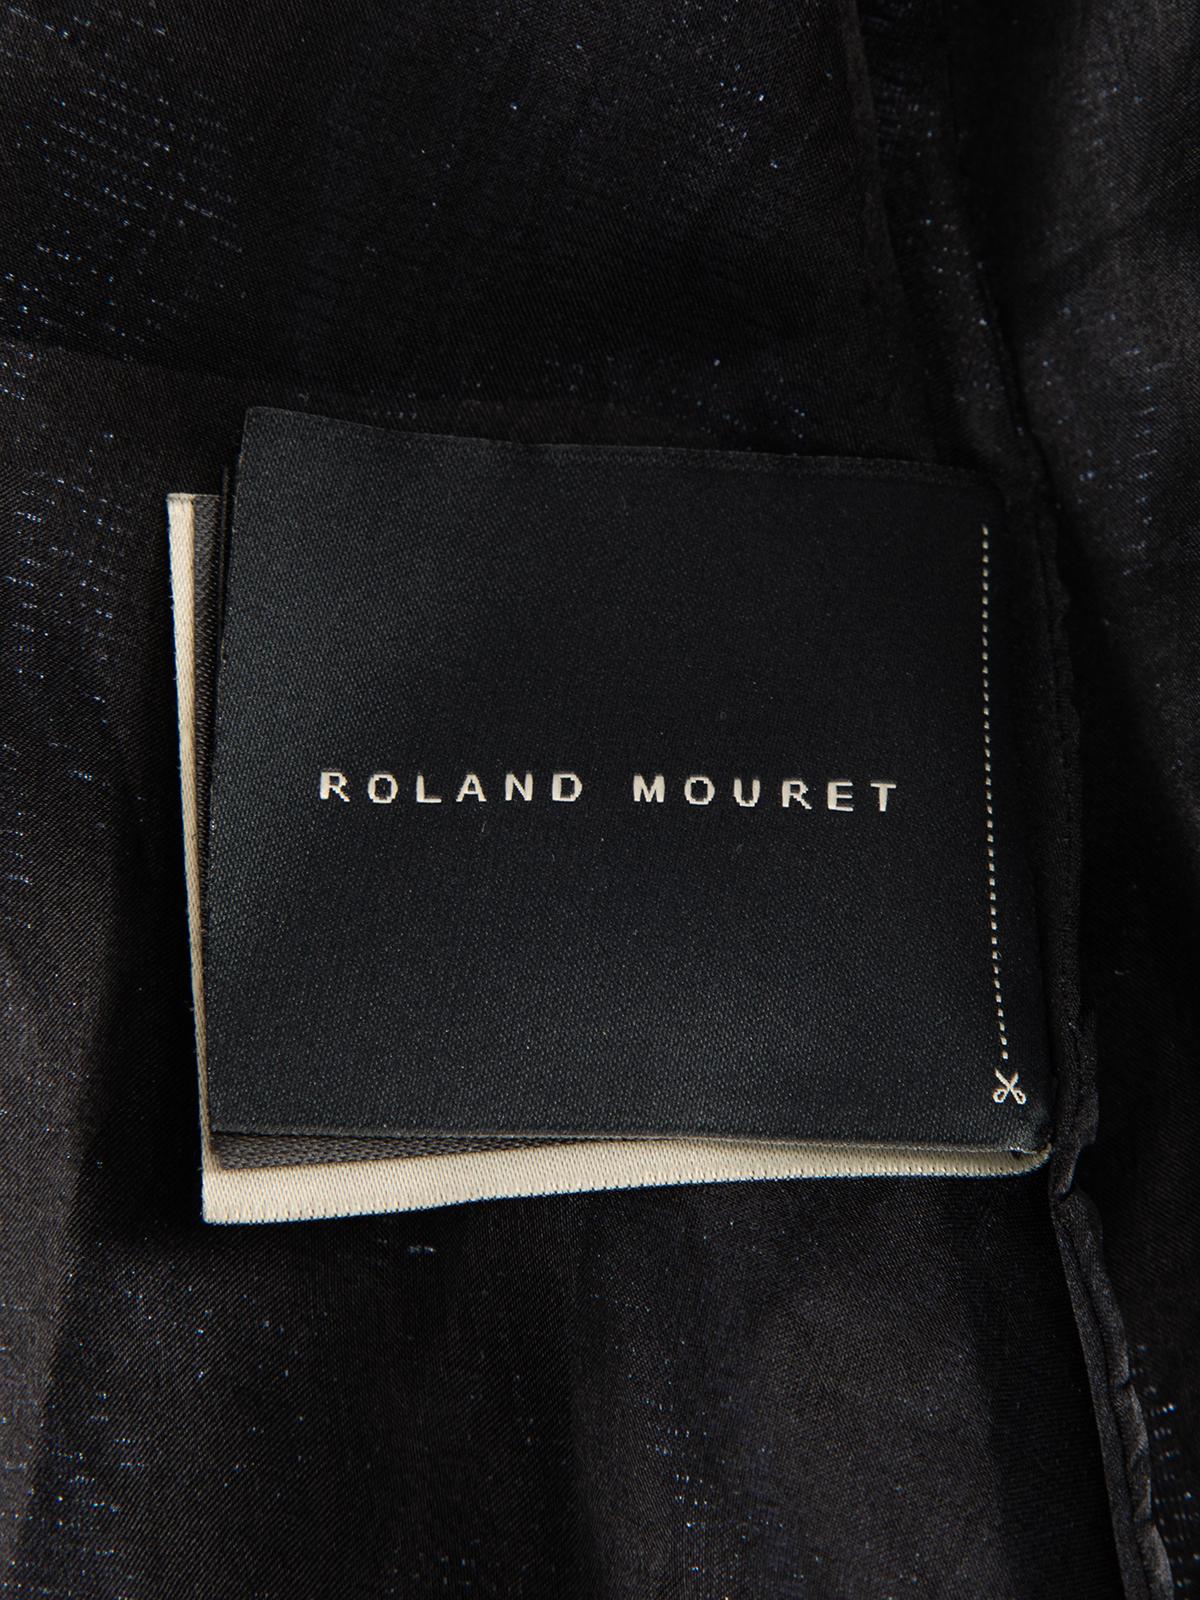 Roland Mouret Women's Strapless Lace Metallic Formal Dress For Sale 3